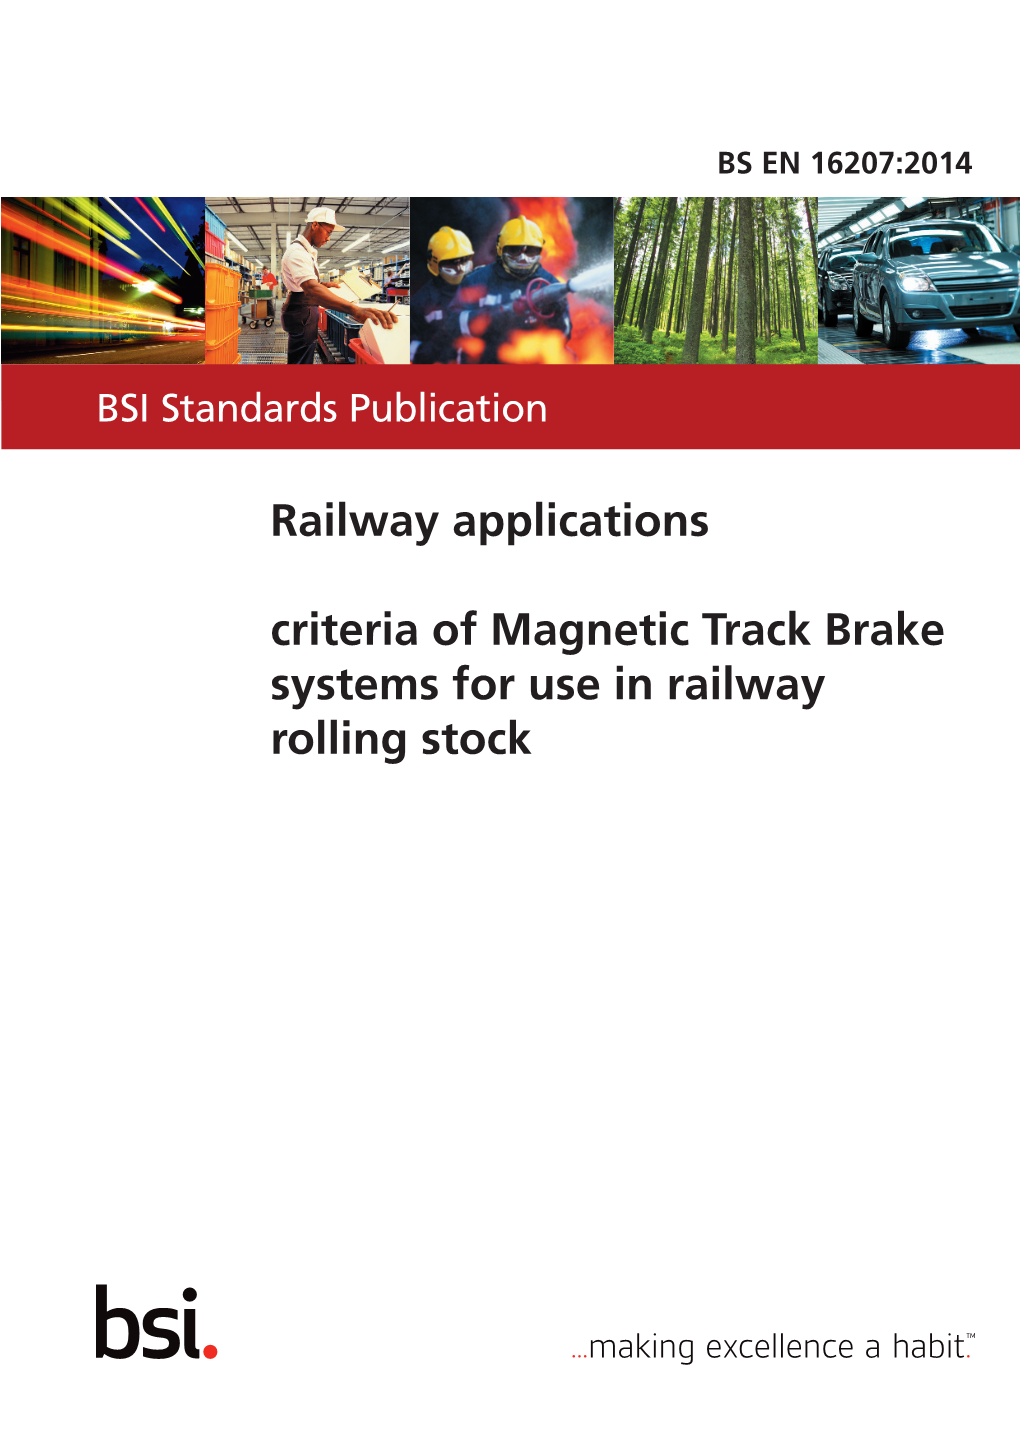 Railway Applications